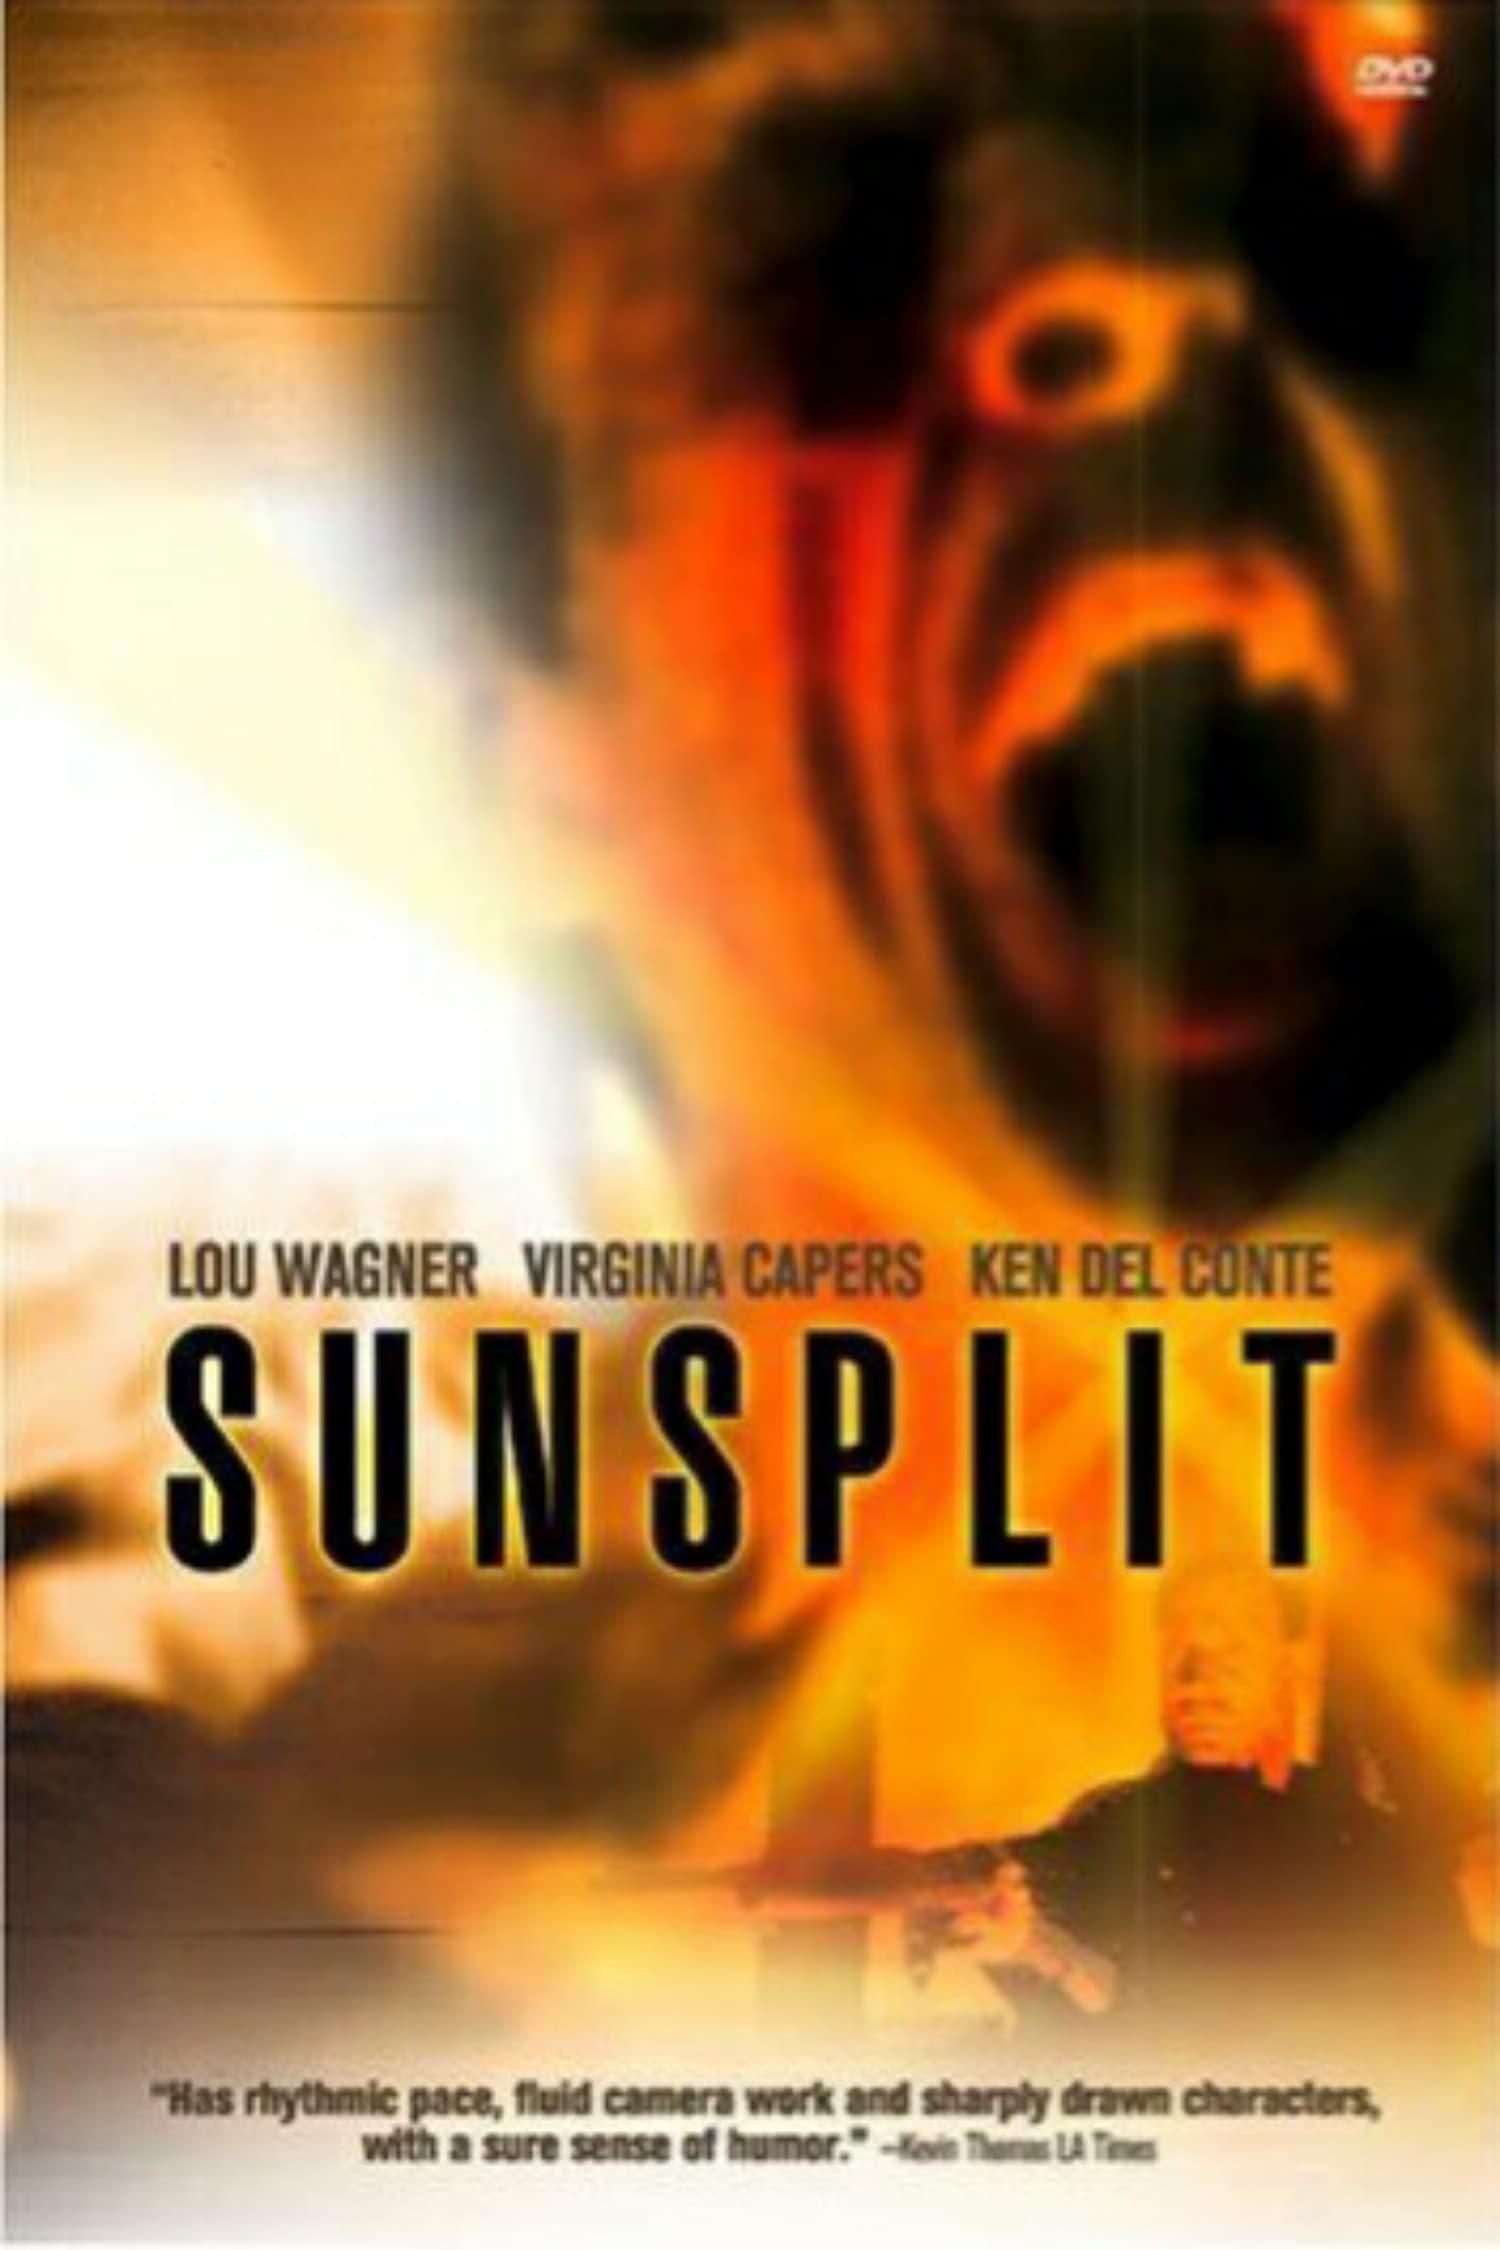 Sunsplit poster